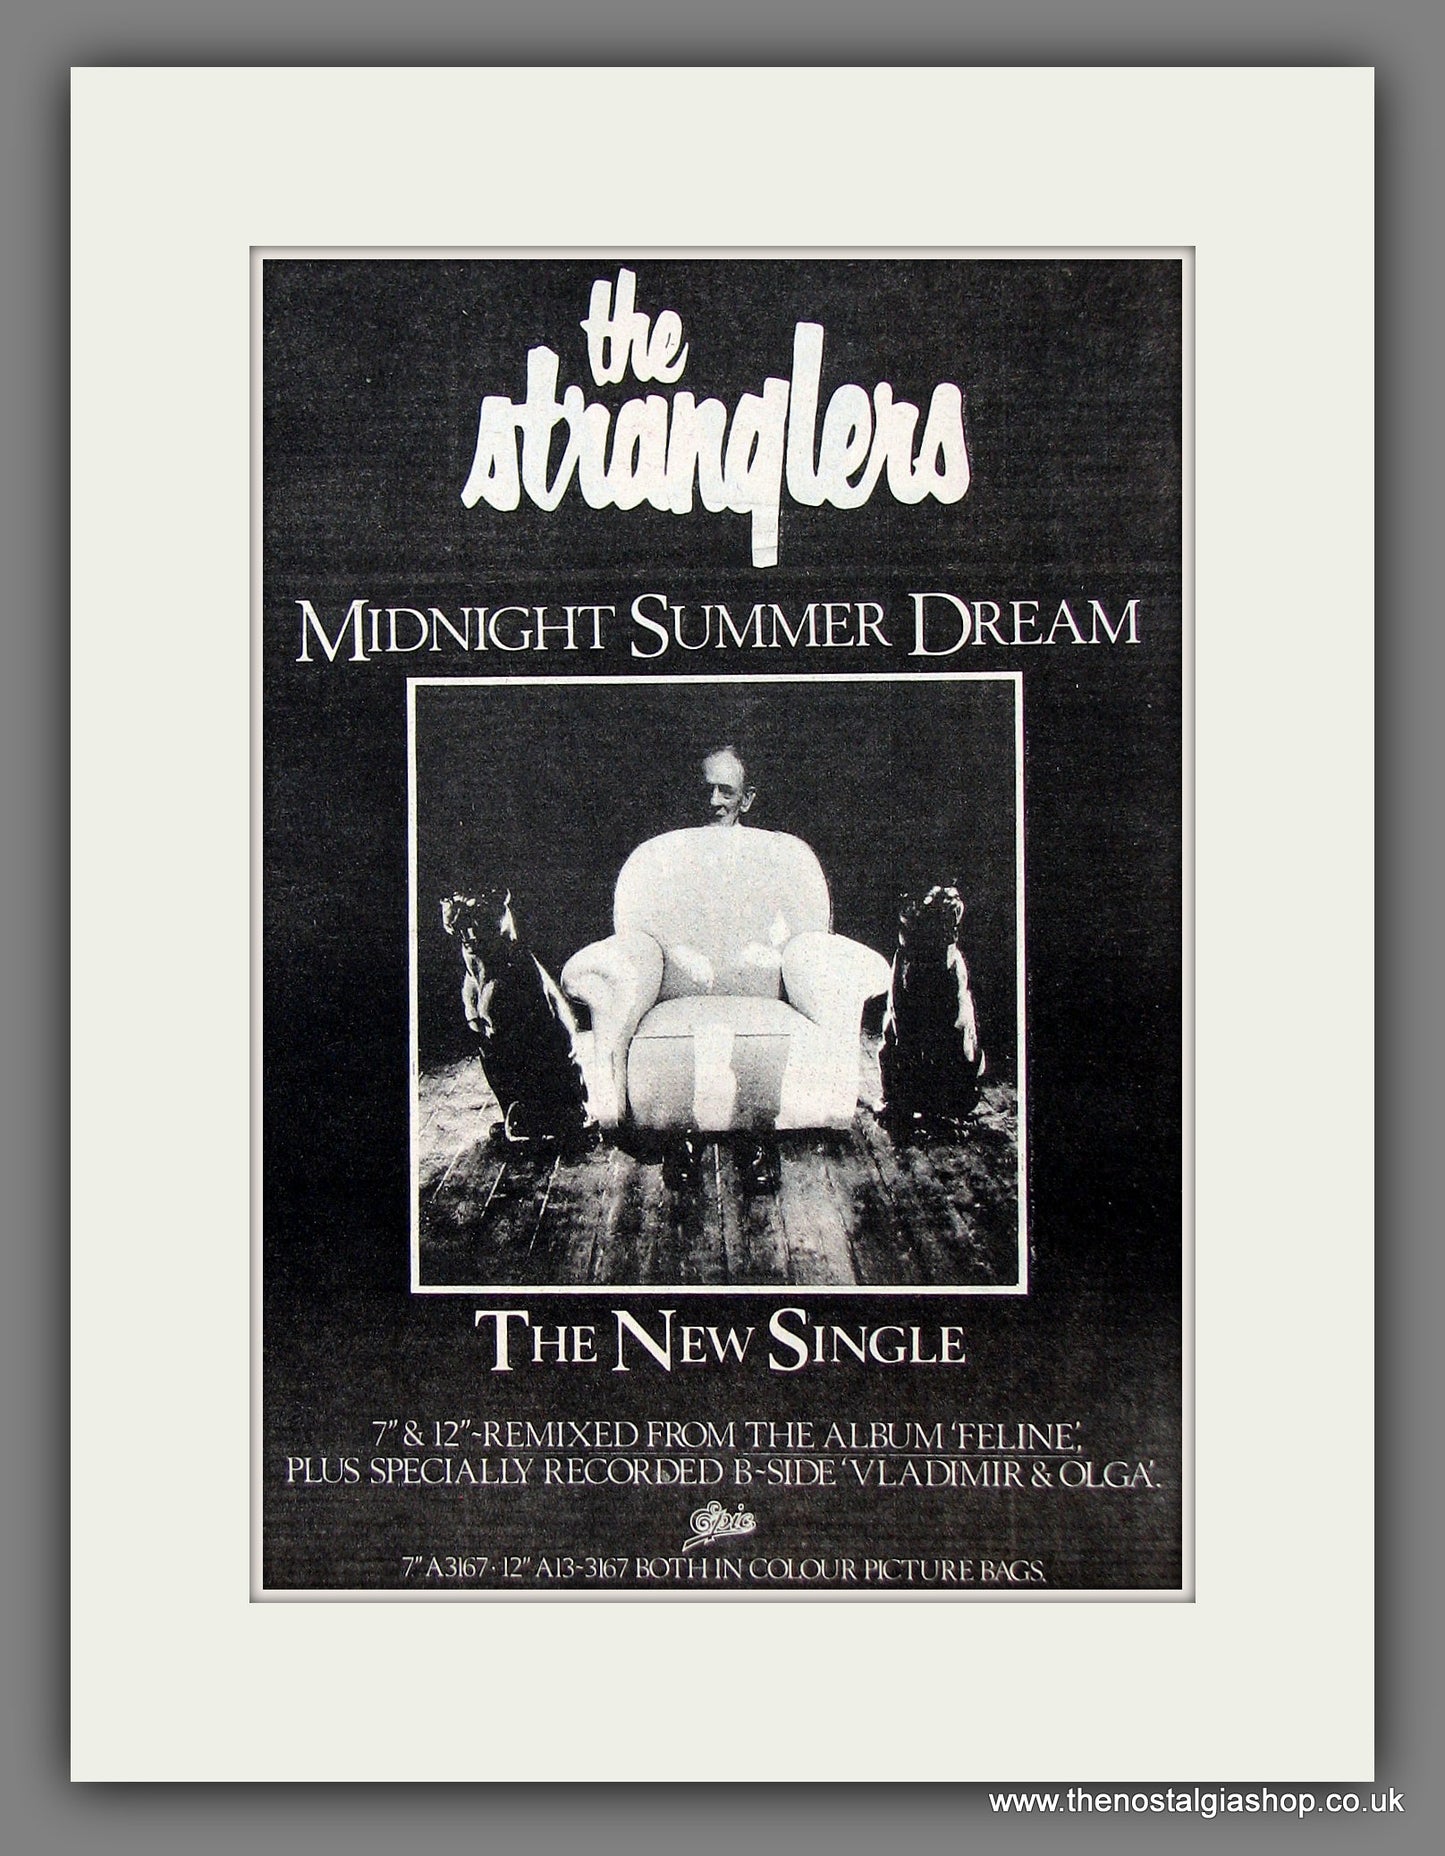 Stranglers (The) Midnight Summer Dream. Original Vintage Advert 1983 (ref AD56392)